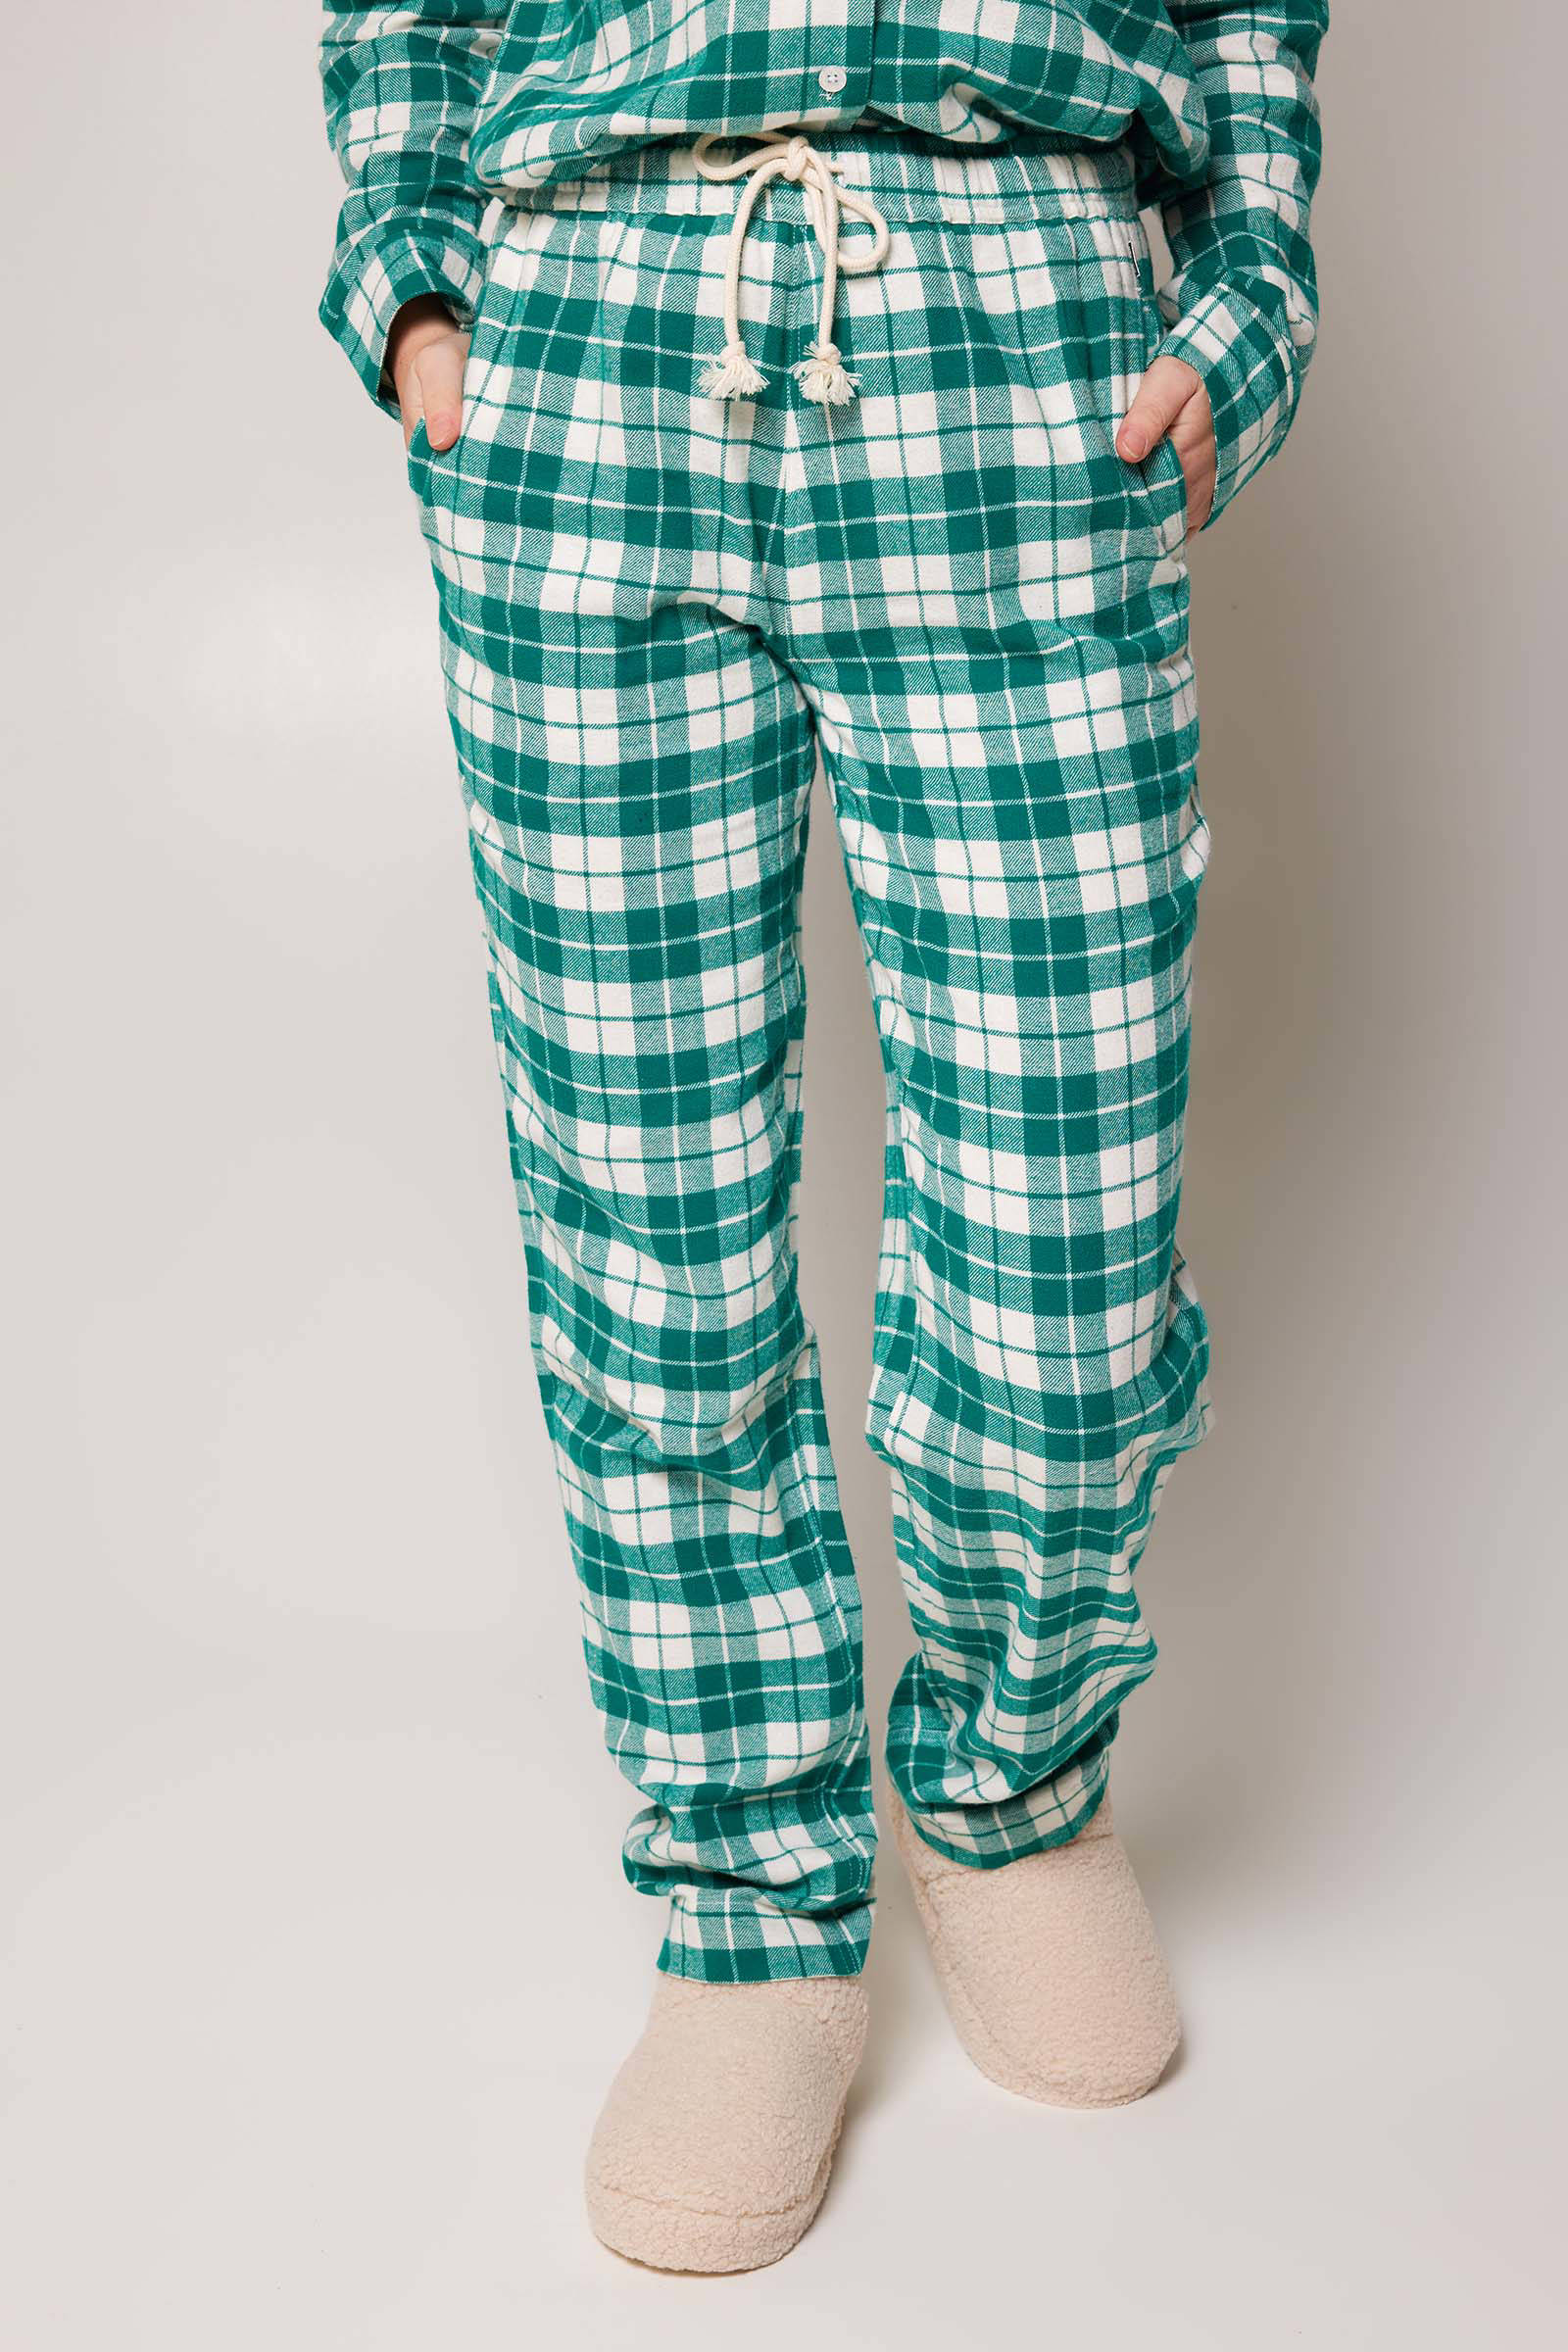 Satijnen pyjama Vintage geruite pyjama satijnen broek pyjama broek vrouwen geruite broek patroon satijnen pyjama broek vintage pyjama broek Kleding Dameskleding Pyjamas & Badjassen Pyjamashorts & Pyjamabroeken Broek 